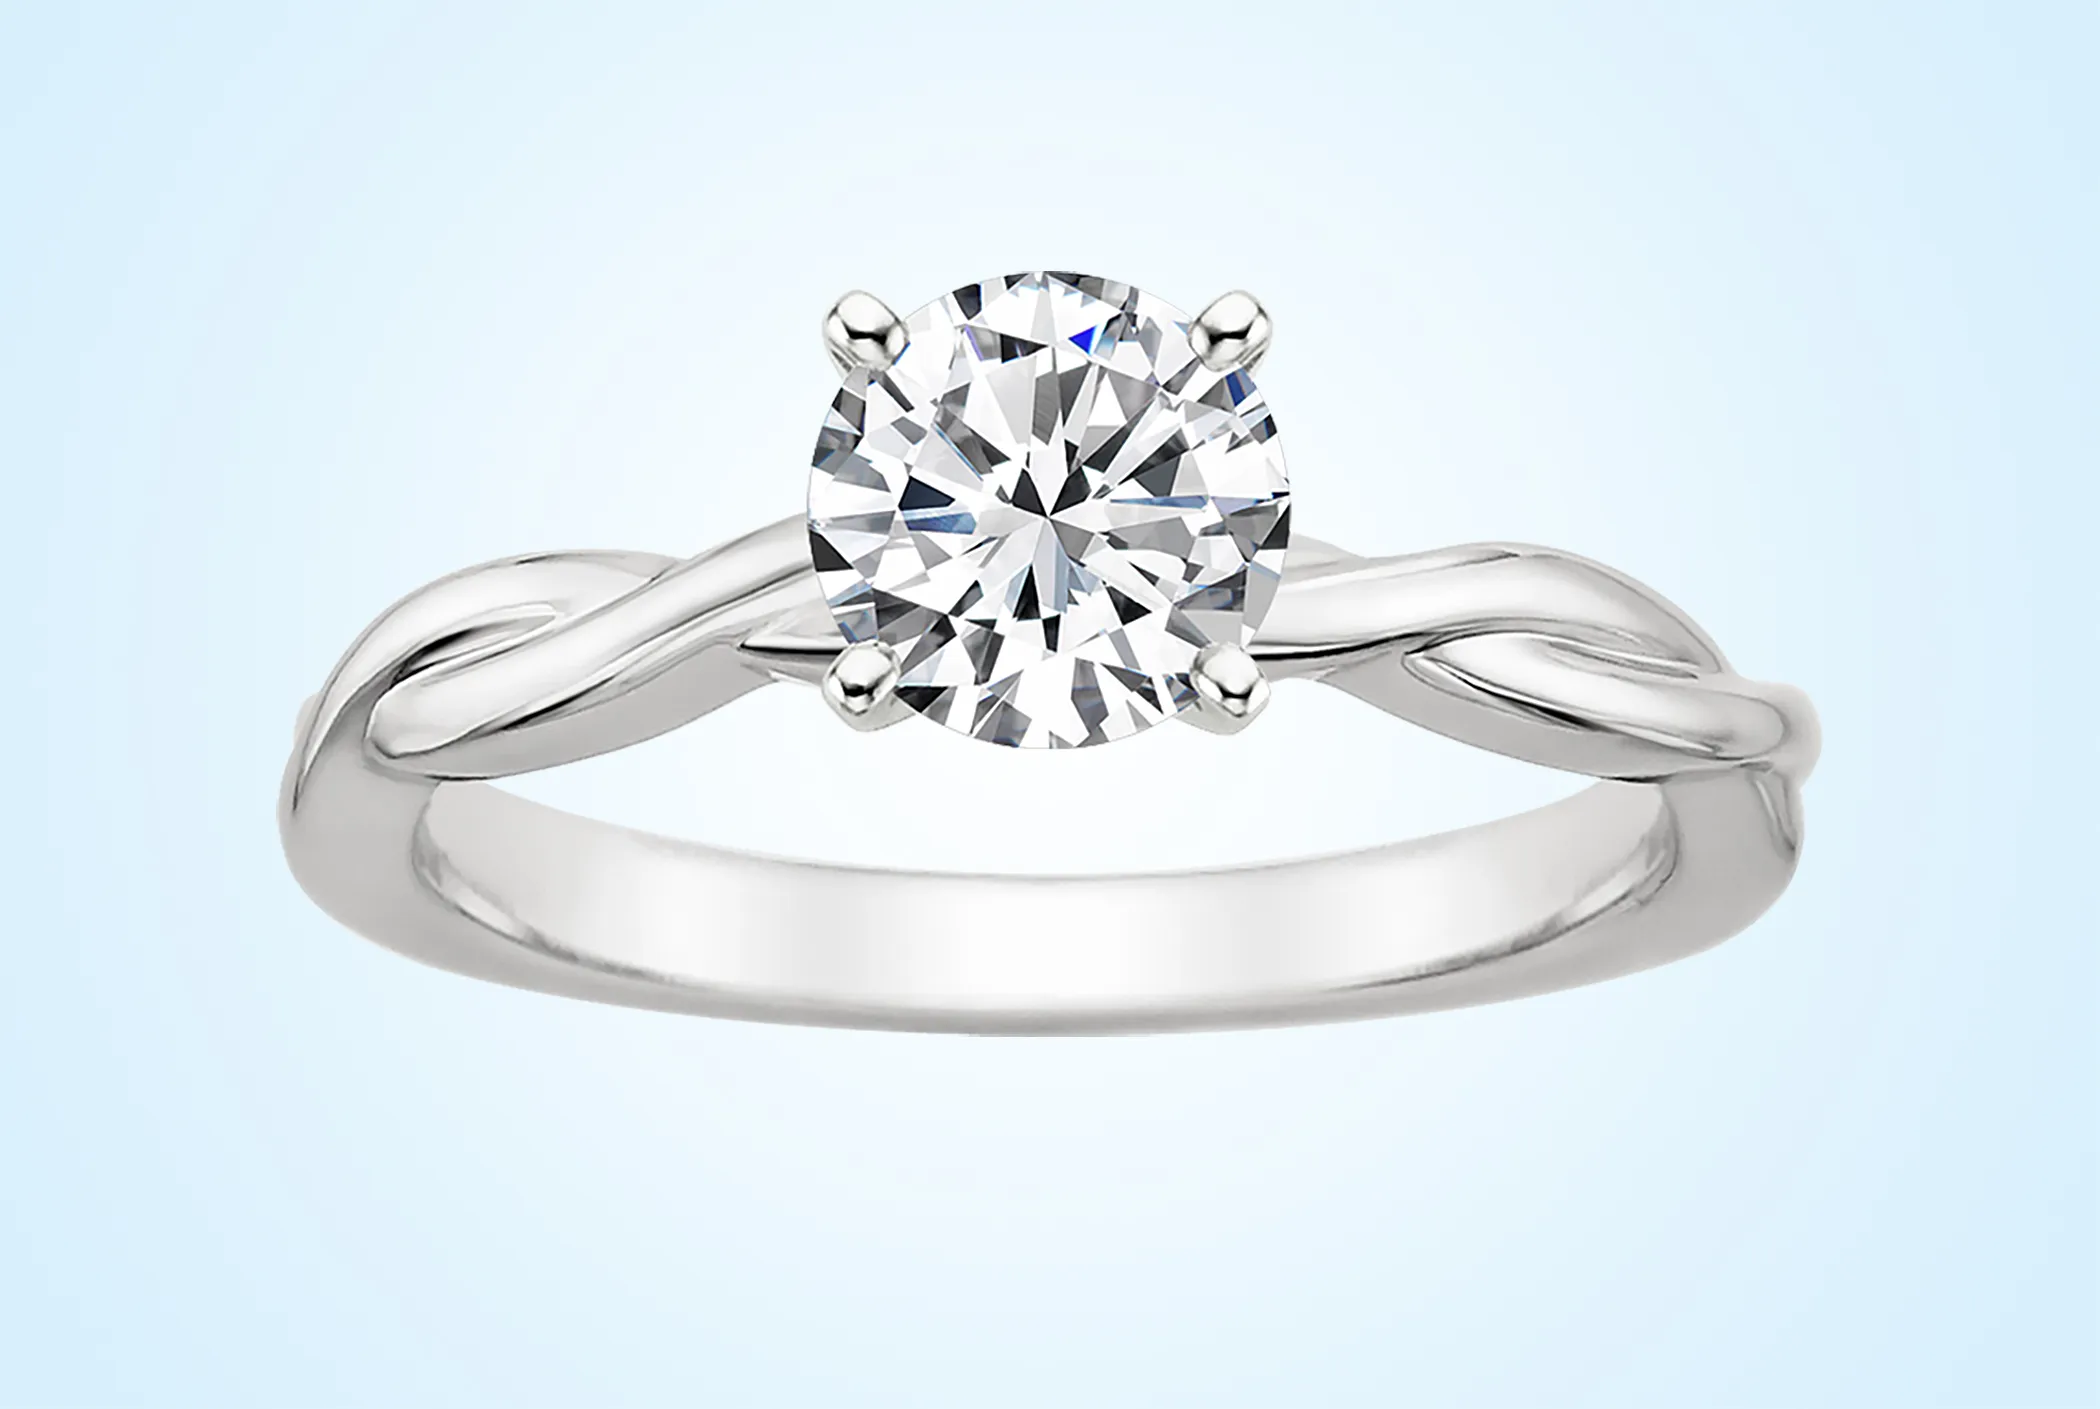 3 Ct Radiant Lab-Created Diamond Solitaire Engagement Ring 14k White Gold  Finish | eBay